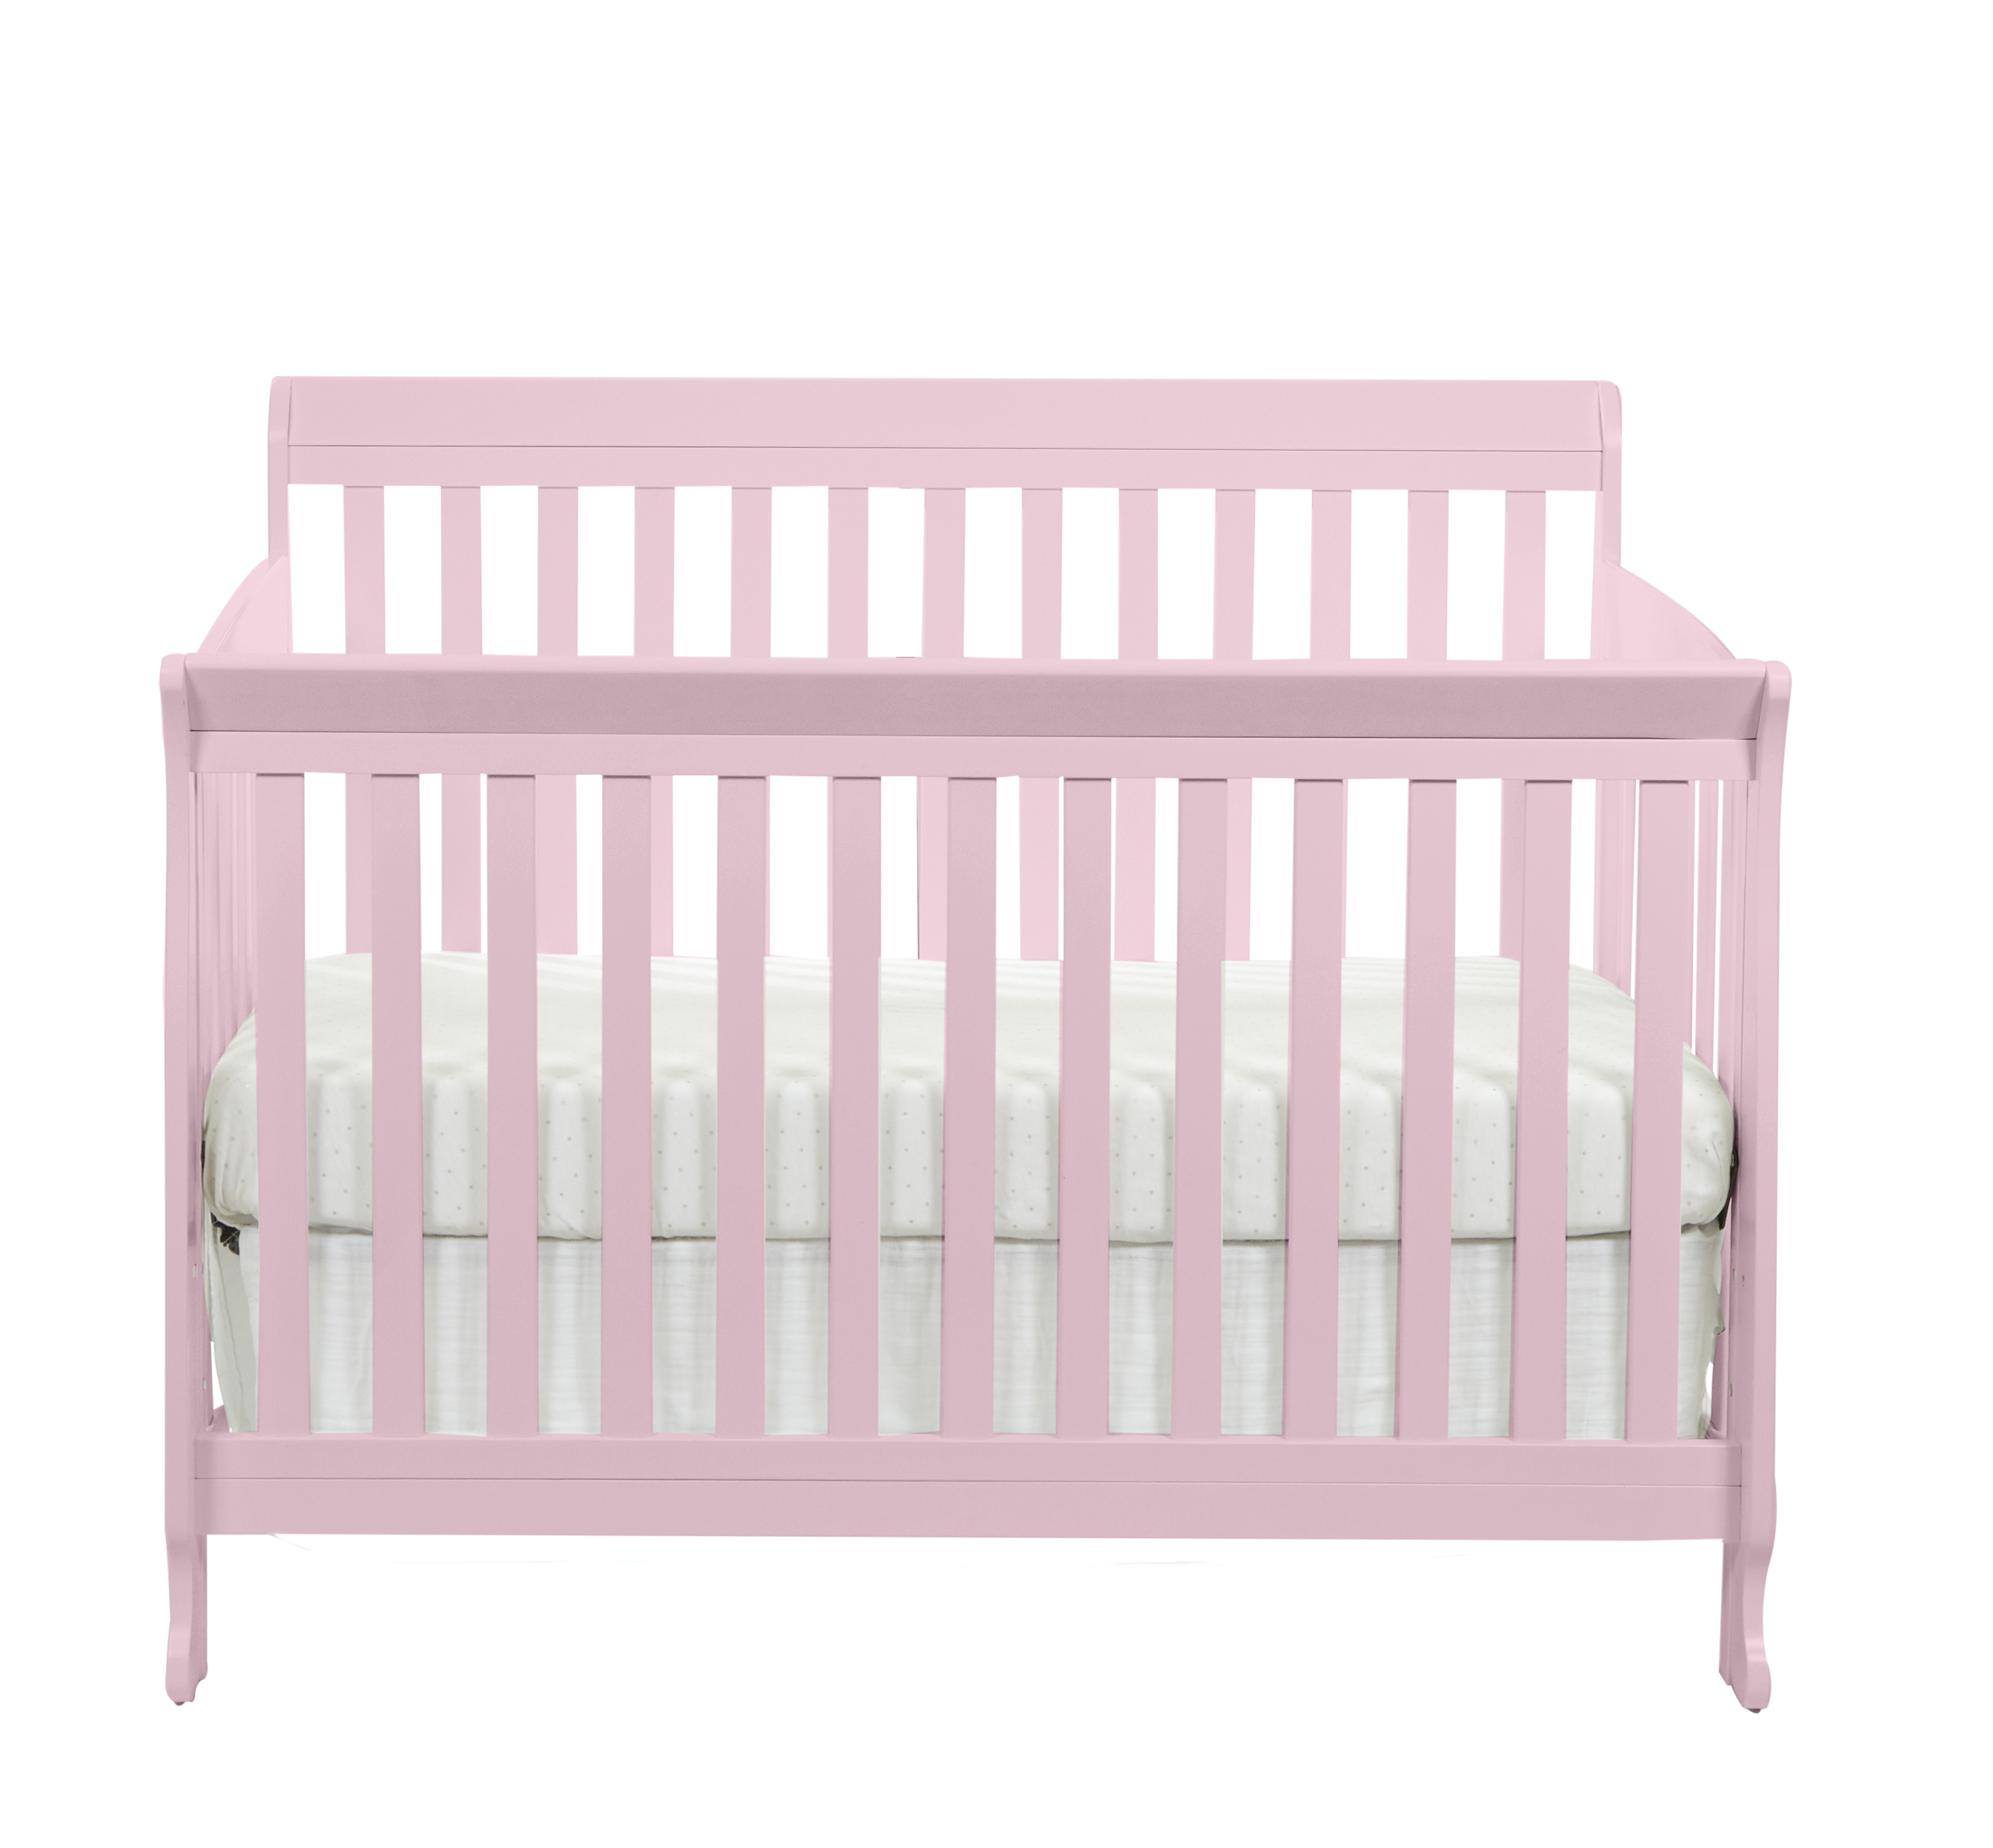 Suite Bebe Riley Crib and Toddler Guard Rail Bundle, Pink - image 4 of 8